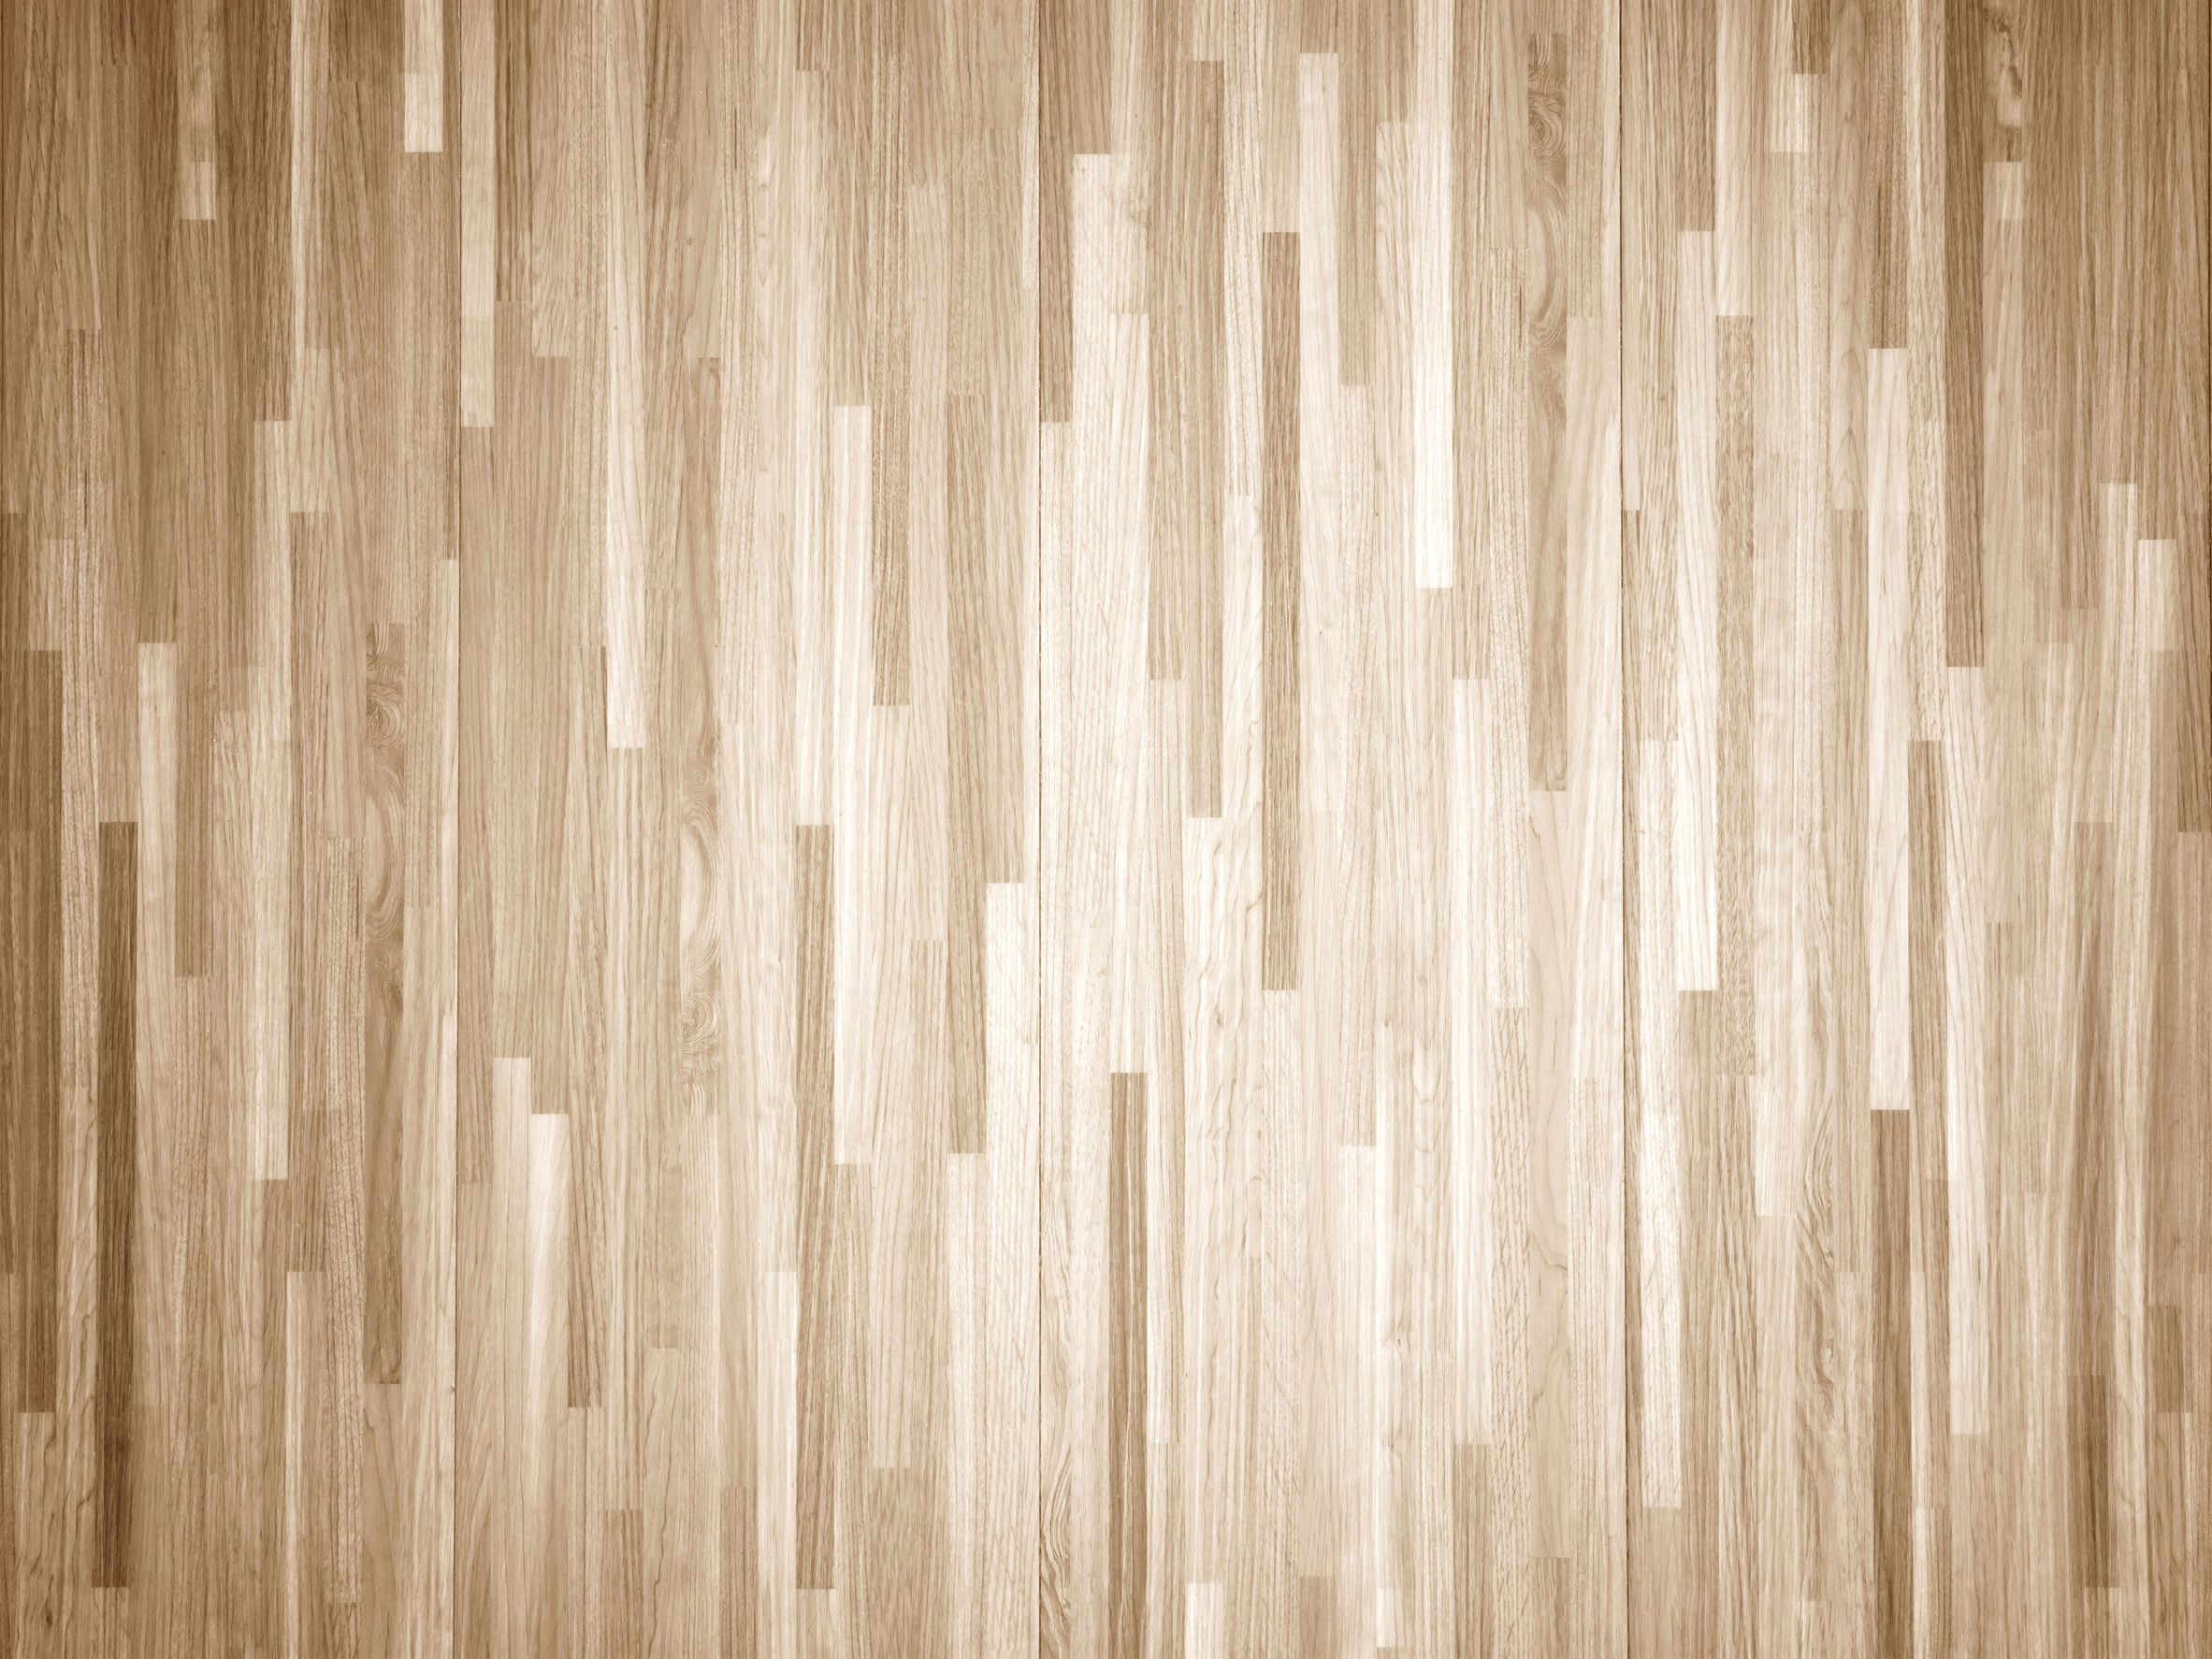 Hardwood Floor Vacuum Reviews Of How to Chemically Strip Wood Floors Woodfloordoctor Com Intended for You